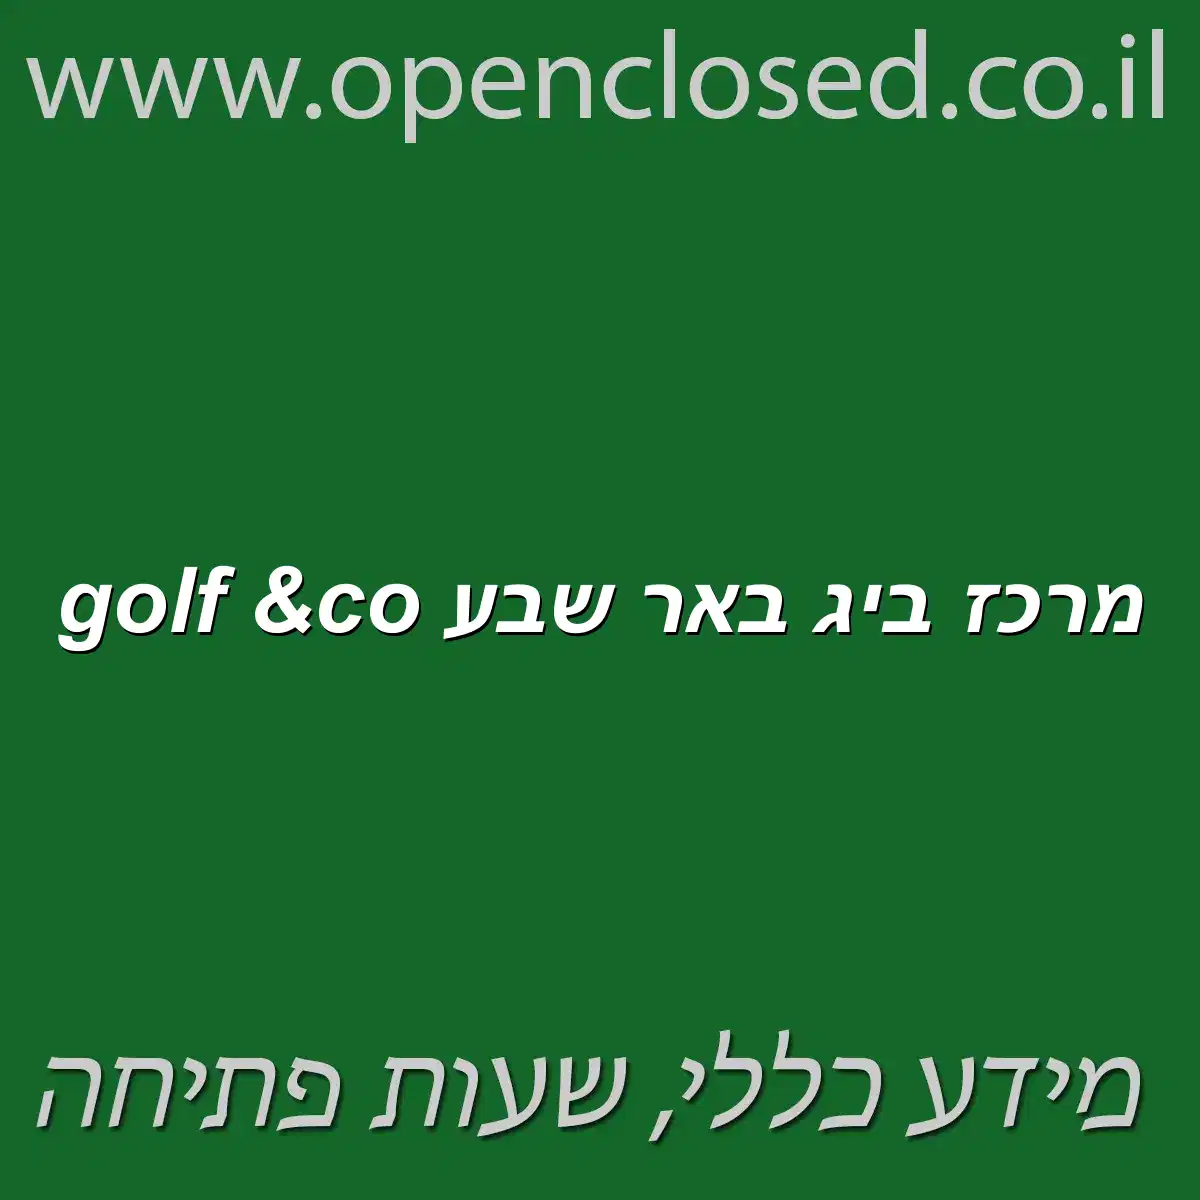 golf &co מרכז ביג באר שבע